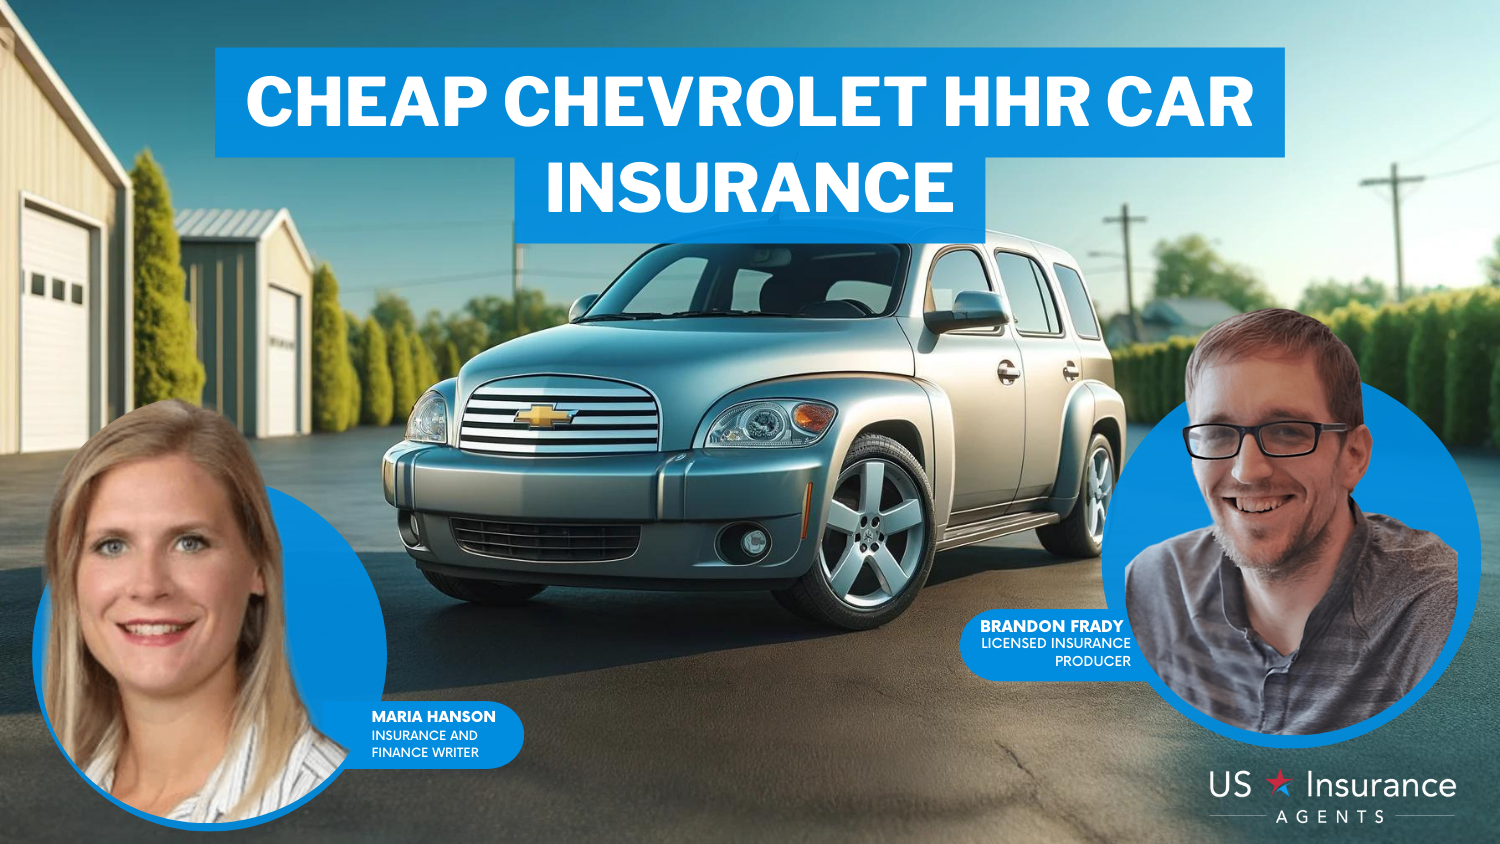 State Farm, Nationwide, and Progressive: Cheap Chevrolet HHR Car Insurance